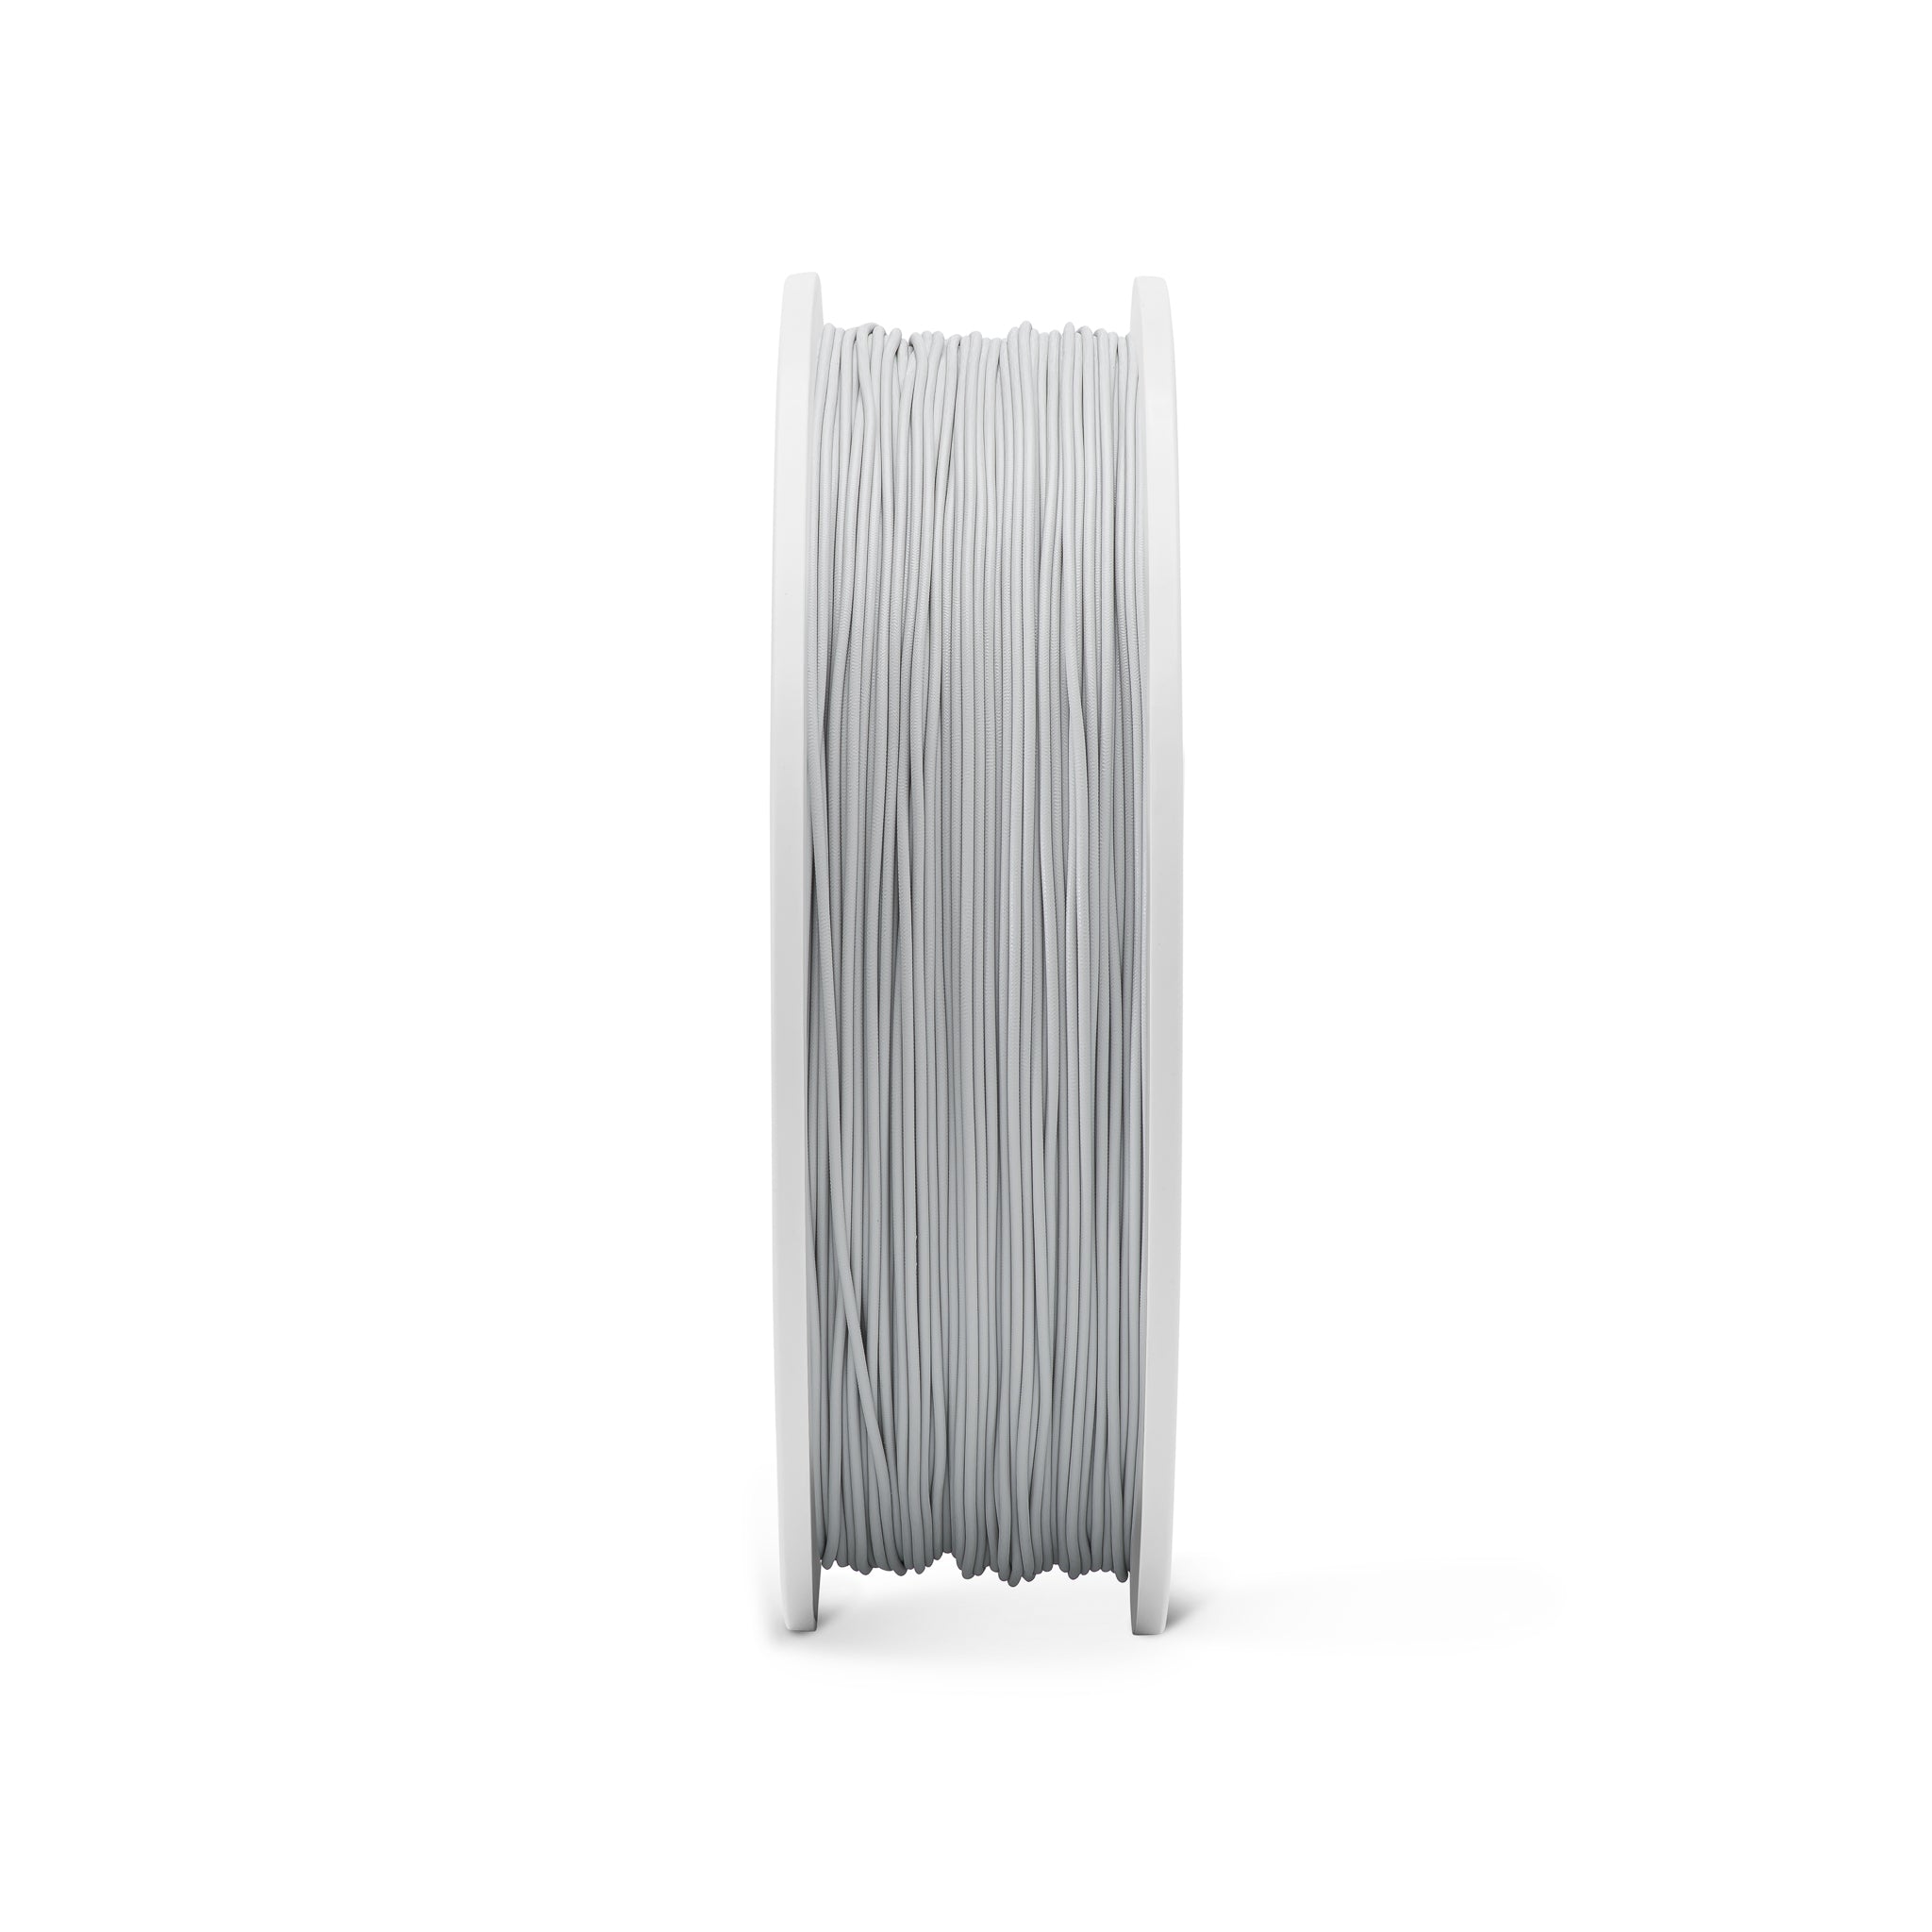 Fiberlogy FIBERFLEX 30D - Grey [1.75mm] (59,80€/Kg)